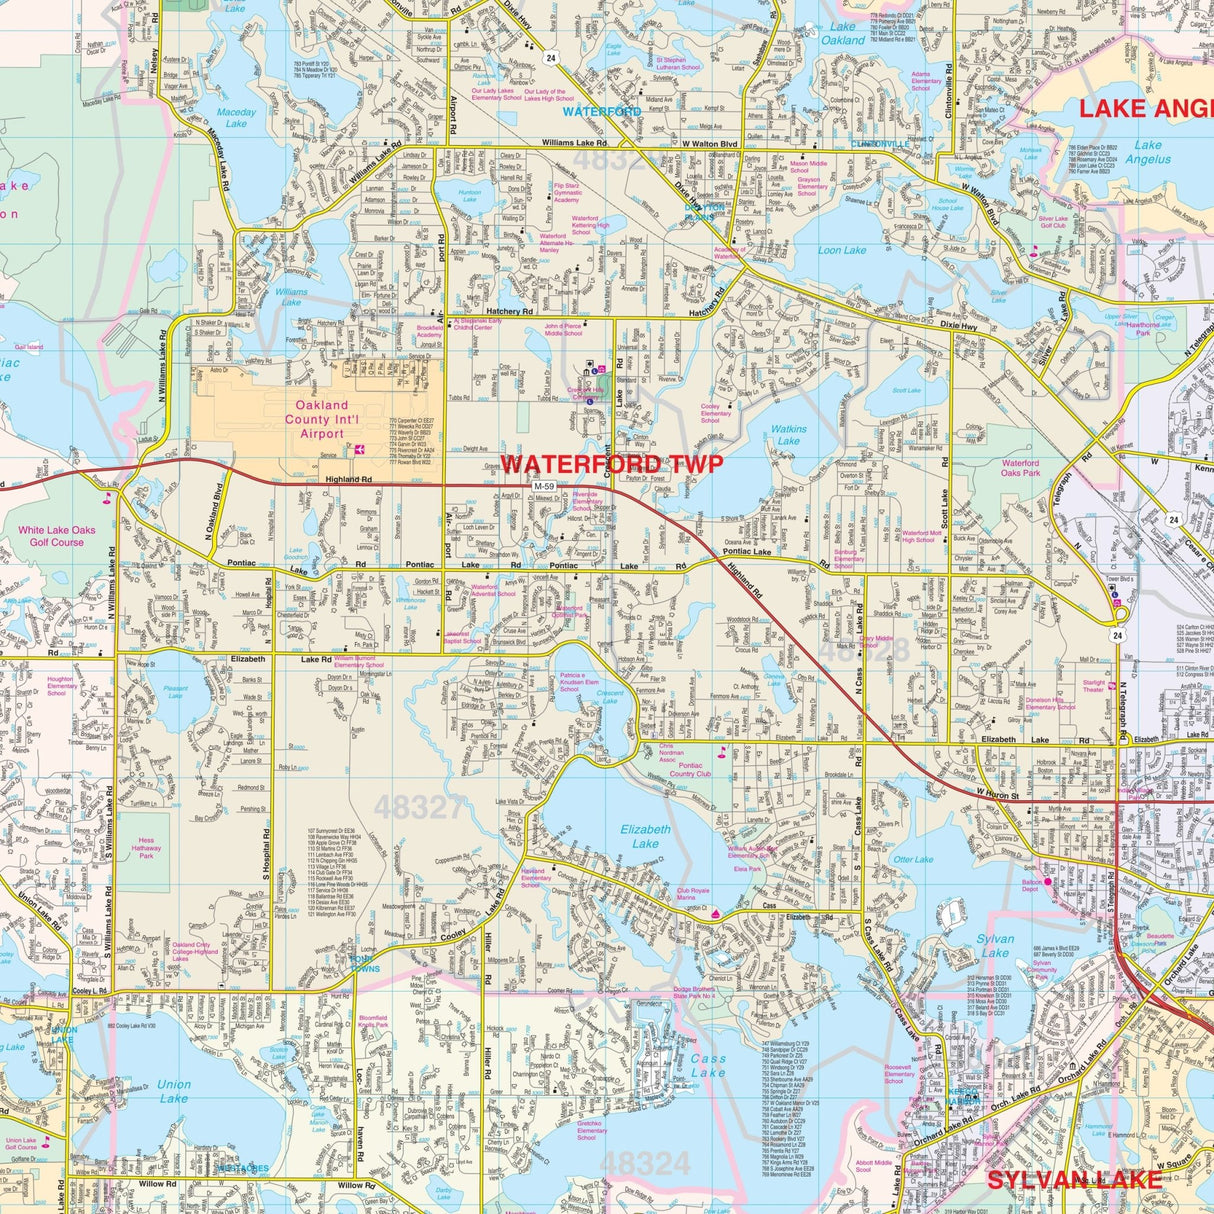 Oakland County, MI Wall Map - KA-C-MI-OAKLAND-PAPER - Ultimate Globes